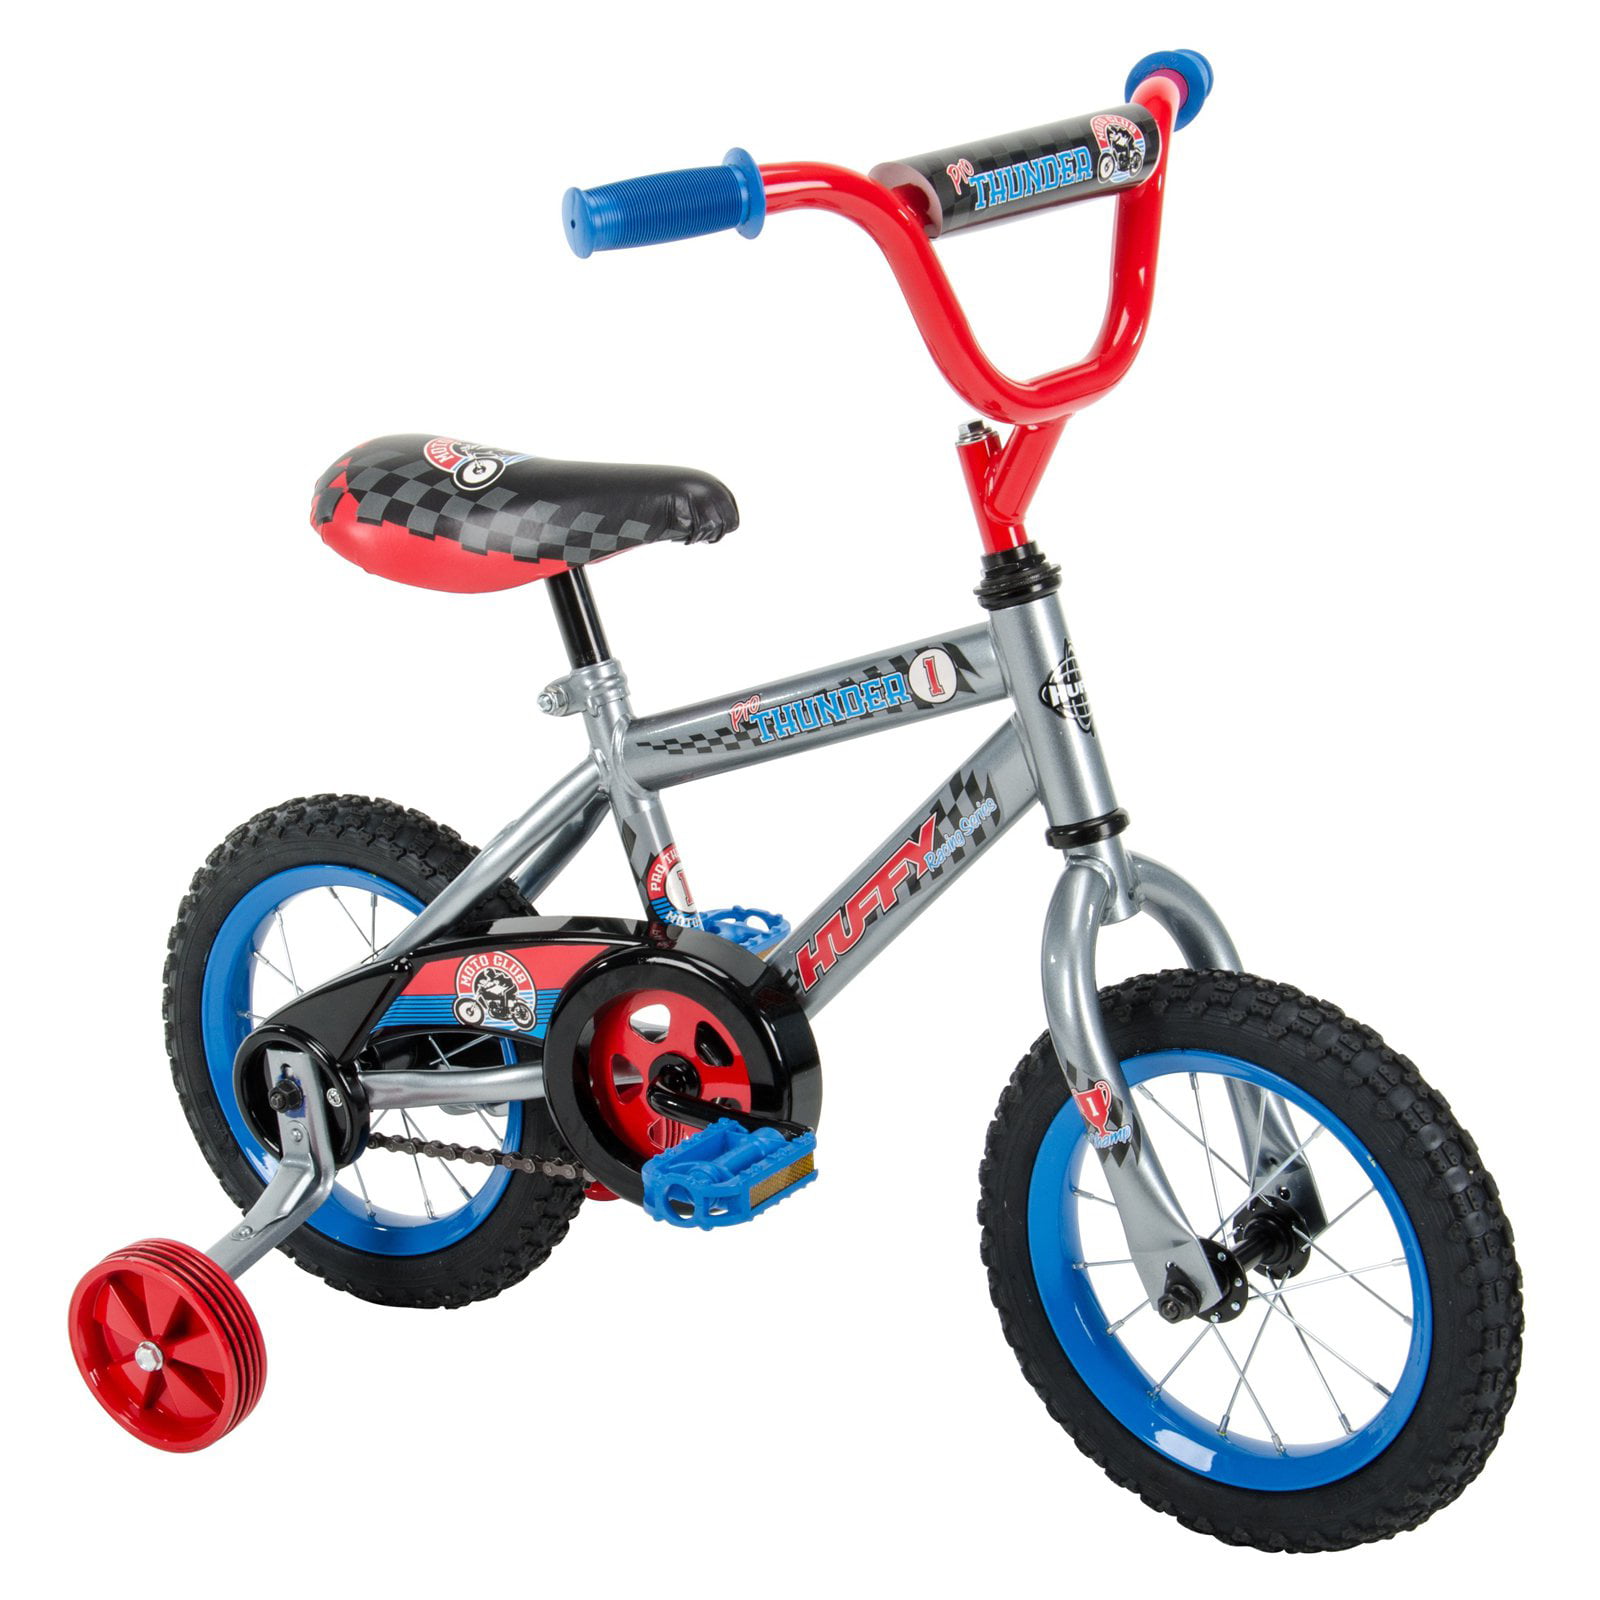 Huffy 12" Pro Thunder Kid Balance Bike With Coaster Brakes Orange open Box for sale online 